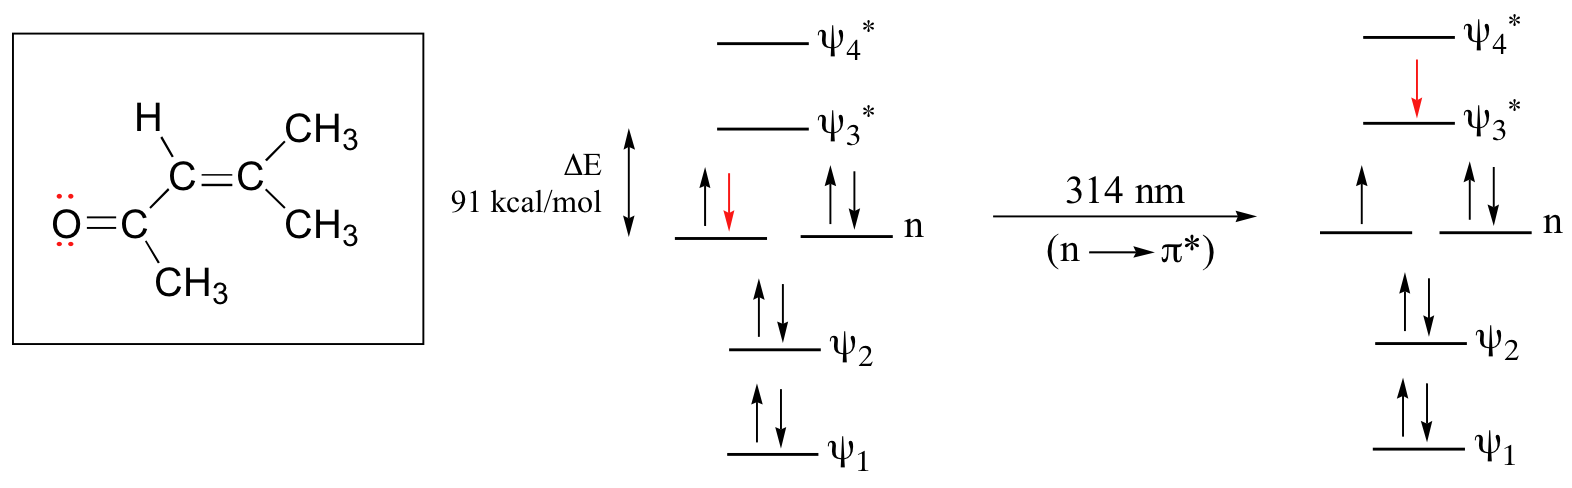 4-methyl-3-penten-2-one has four lone pairs in the bonding orbital, three lone pairs and one unpaired electron in the n orbital, and one unpaired electron in the anti-bonding orbital. 